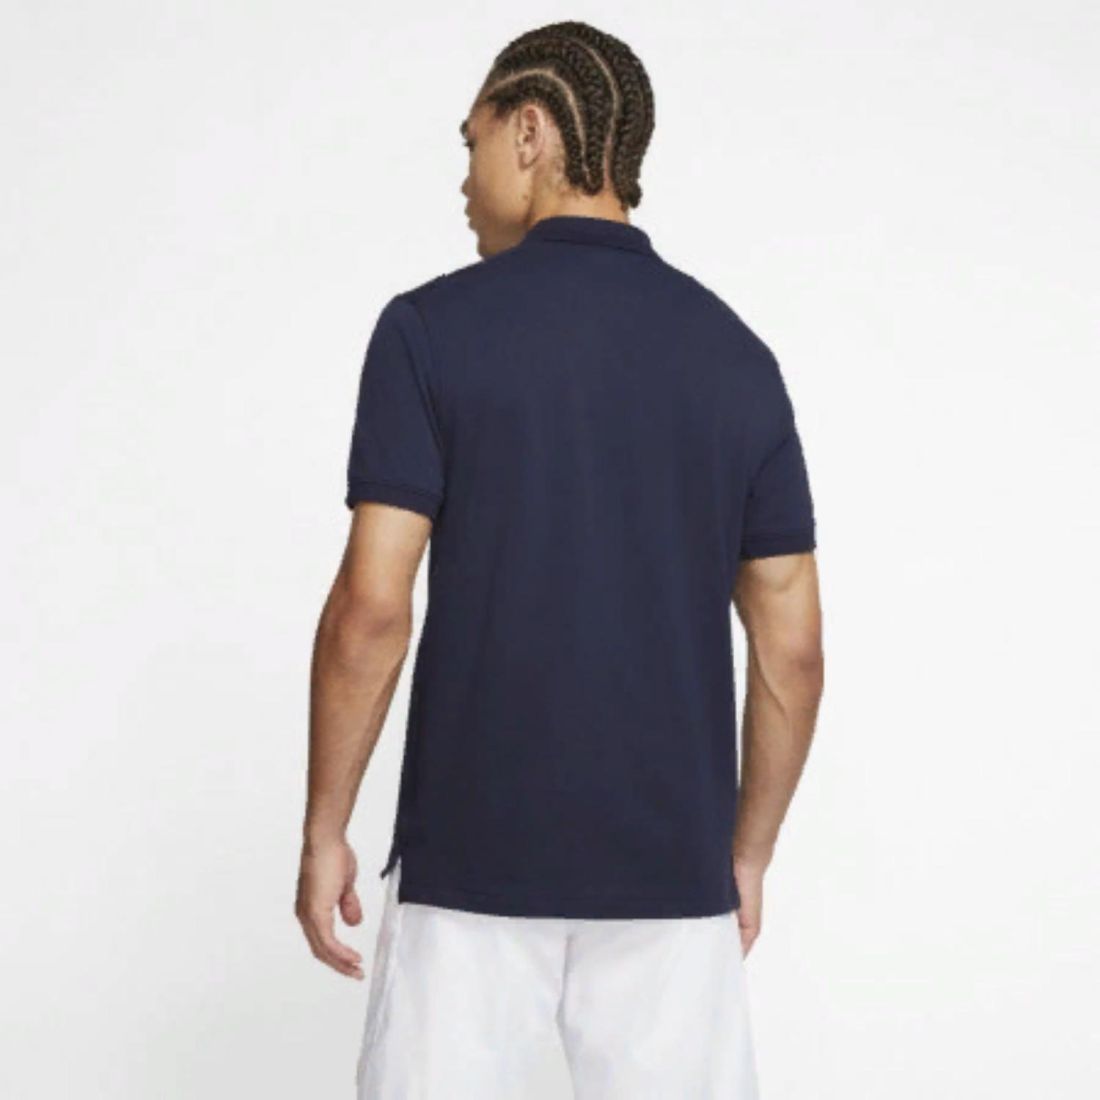 Спортивная мужская футболка The Nike Polo